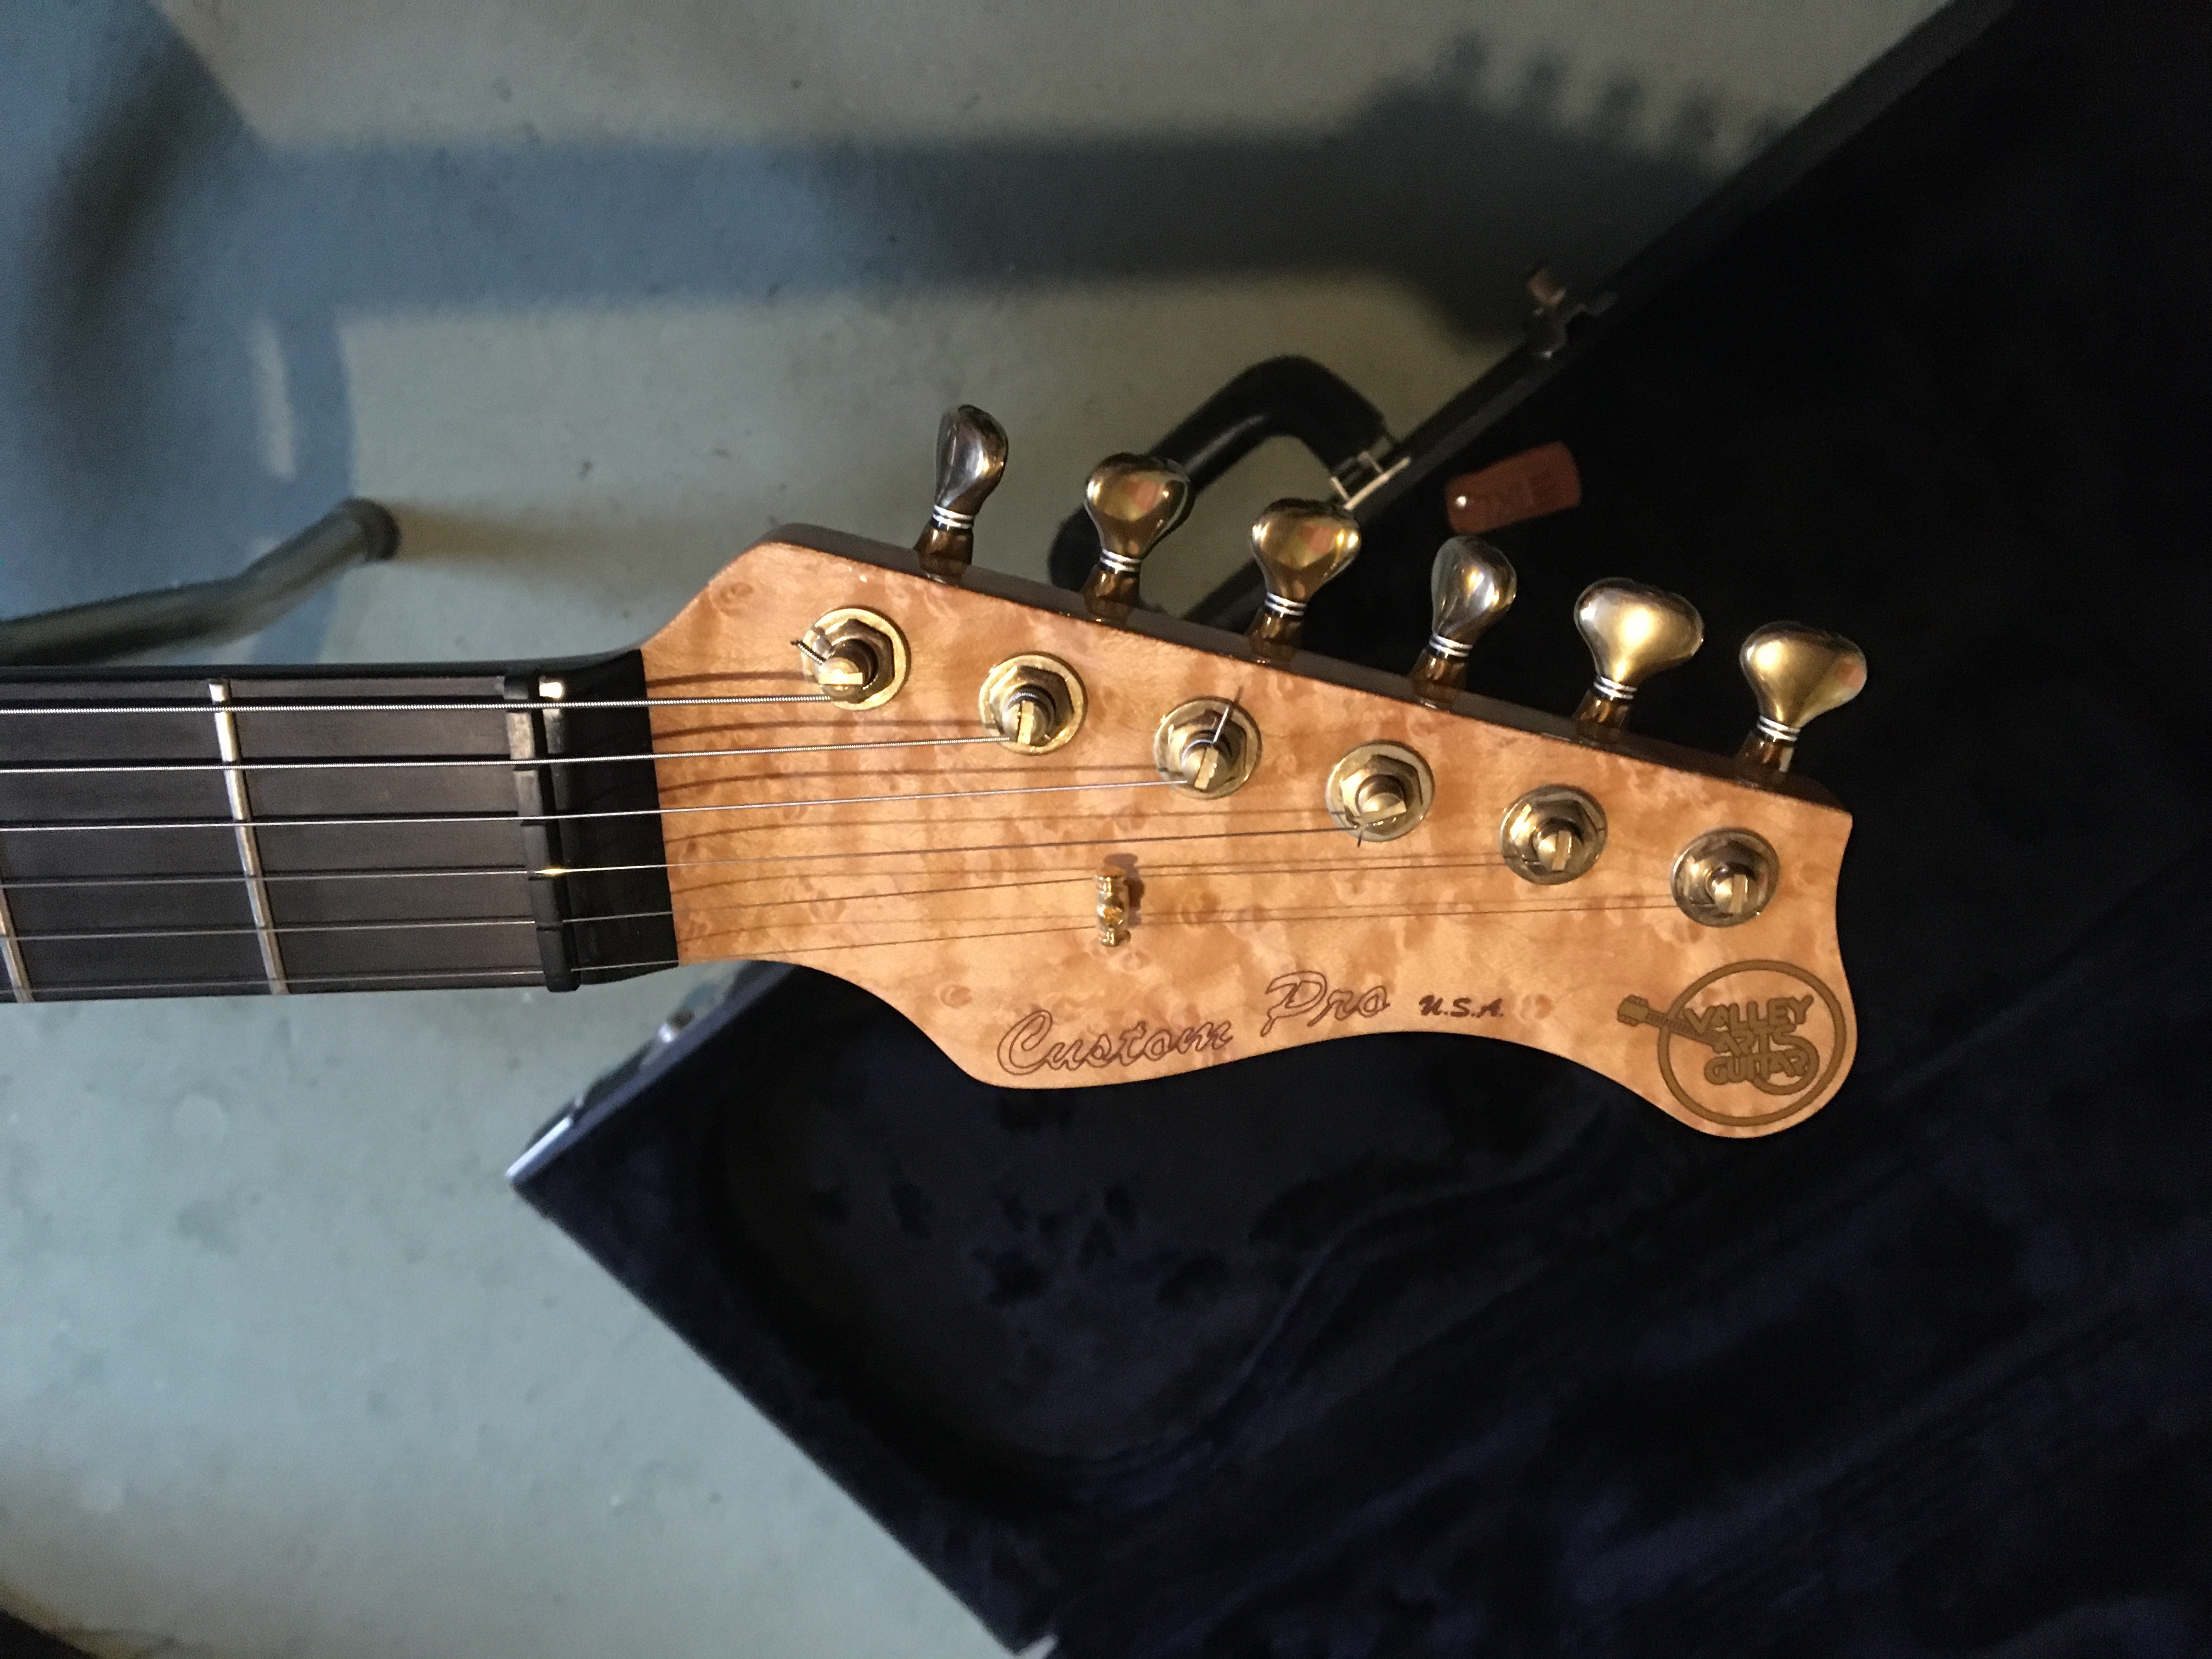 Custom Pro USA (strat) Valley Arts Guitars - Audiofanzine